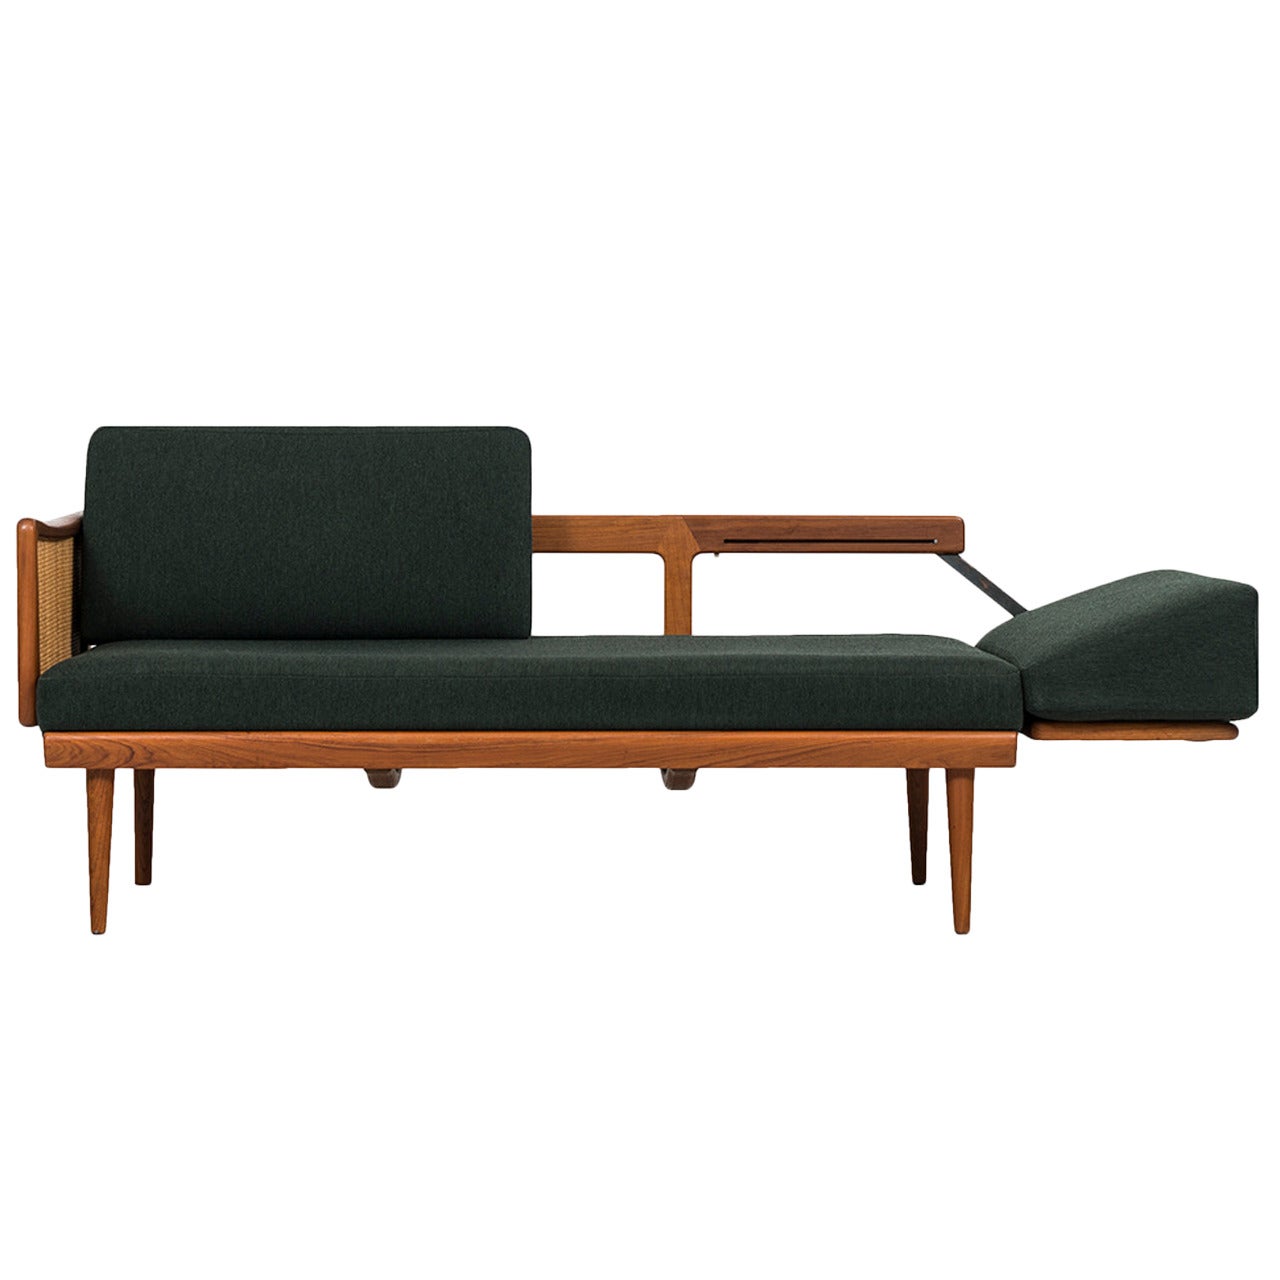 Peter Hvidt & Orla Mølgaard-Nielsen sofa model FD 451